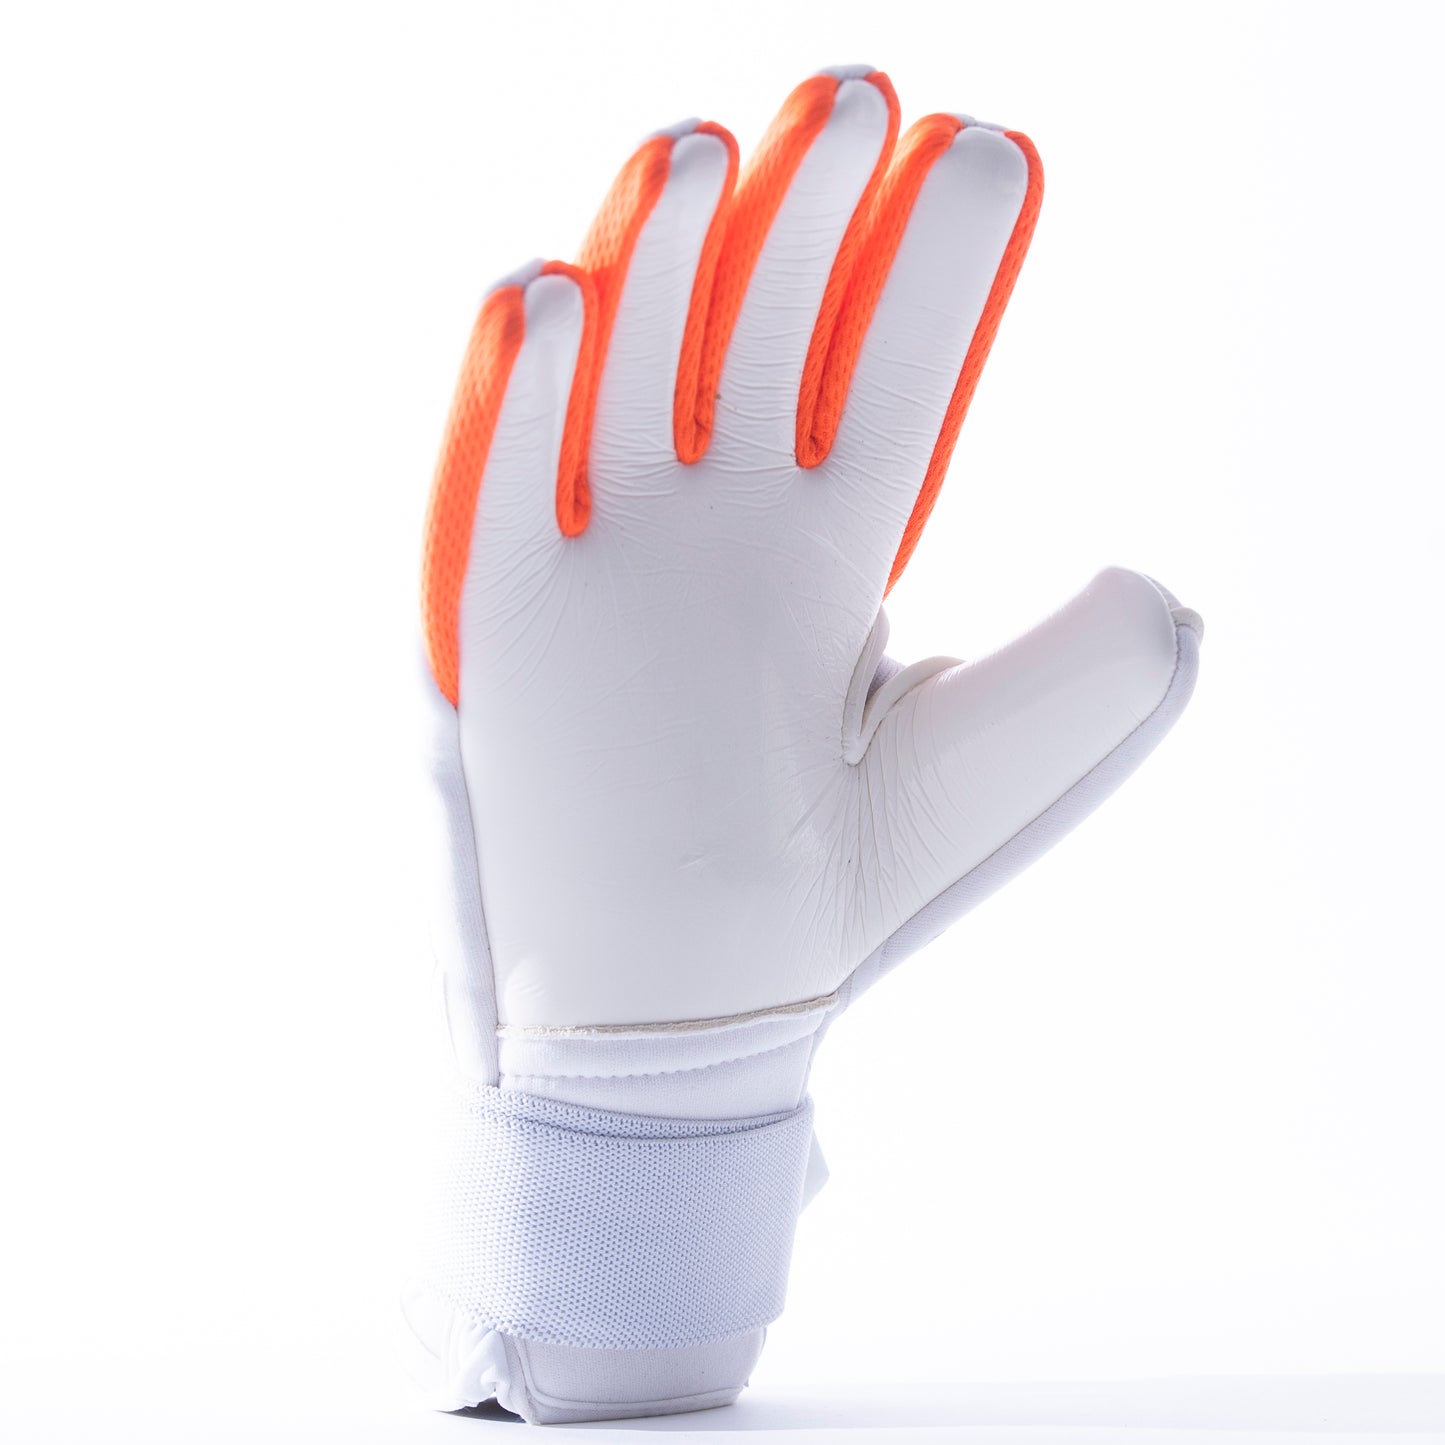 White and neon orange goalkeeper glove